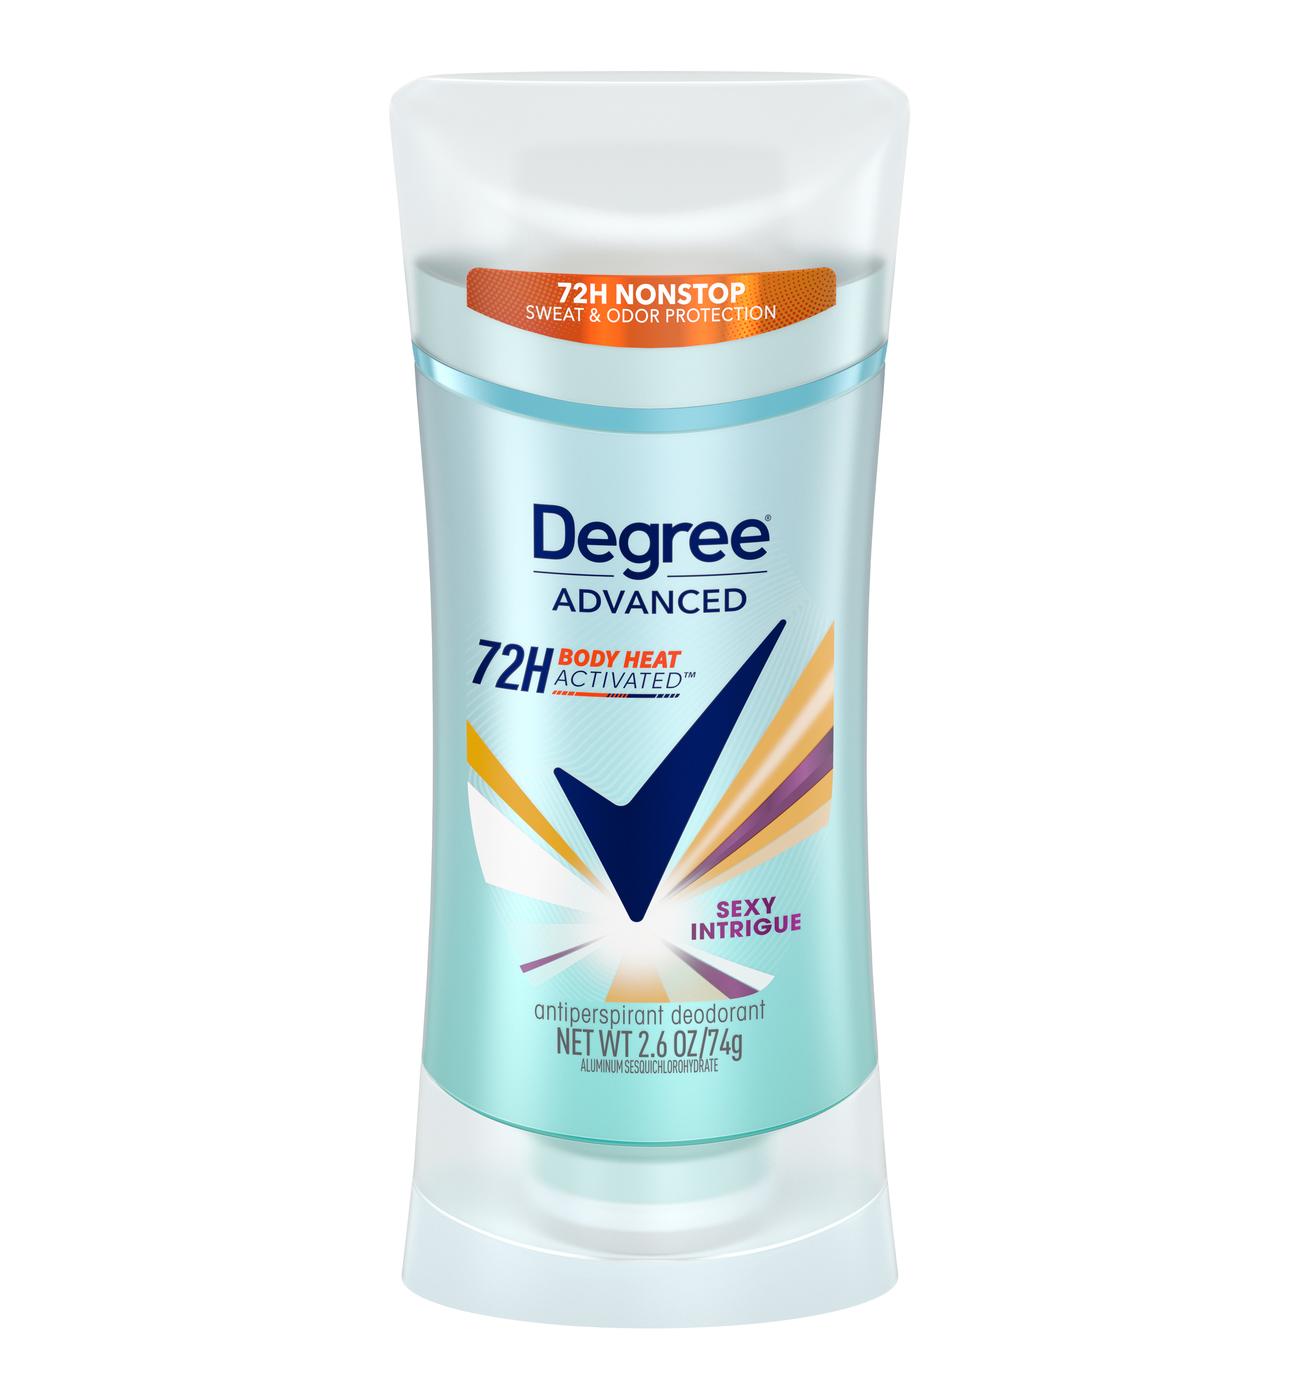 Degree Advanced MotionSense Antiperspirant Deodorant - Sexy Intrigue; image 1 of 3